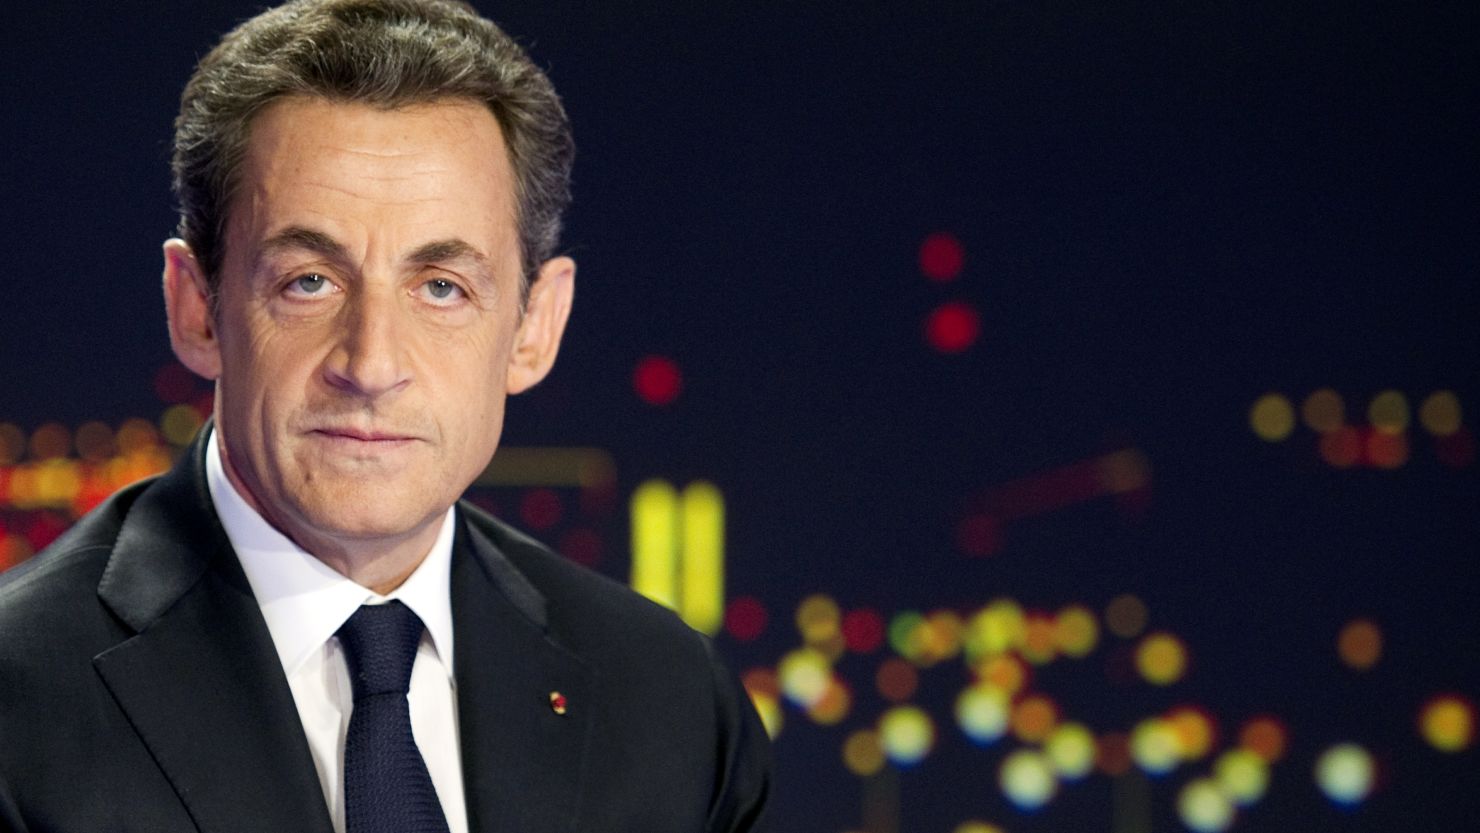 French President Nicolas Sarkozy announces his re-election bid on French television on February 15, 2012.